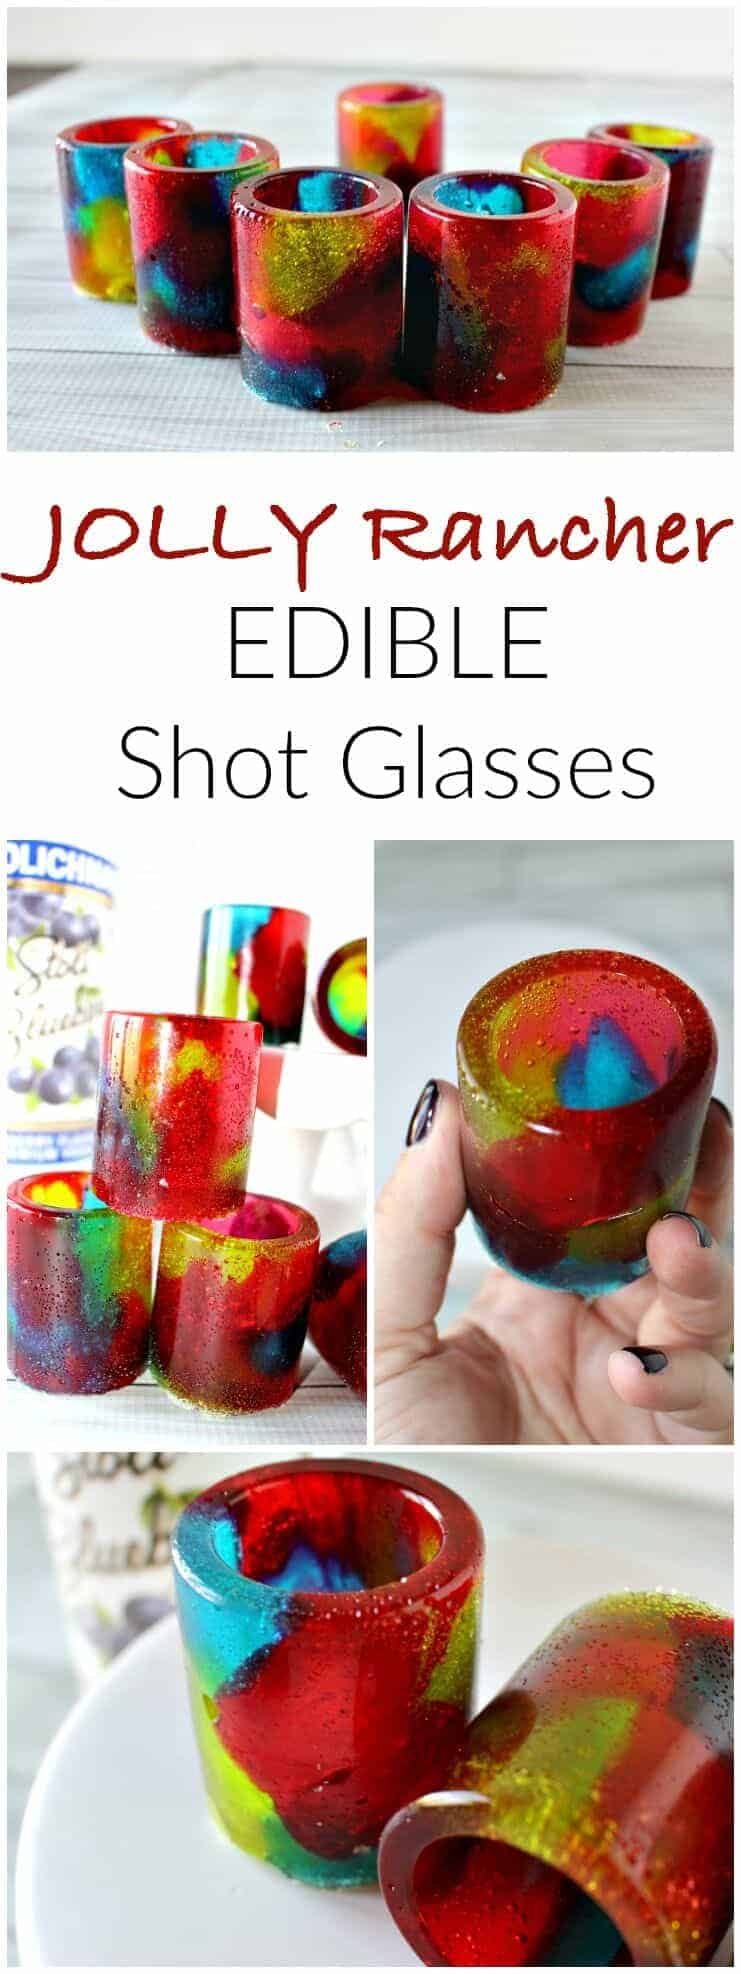 Jolly Rancher EDIBLE Shot Glasses